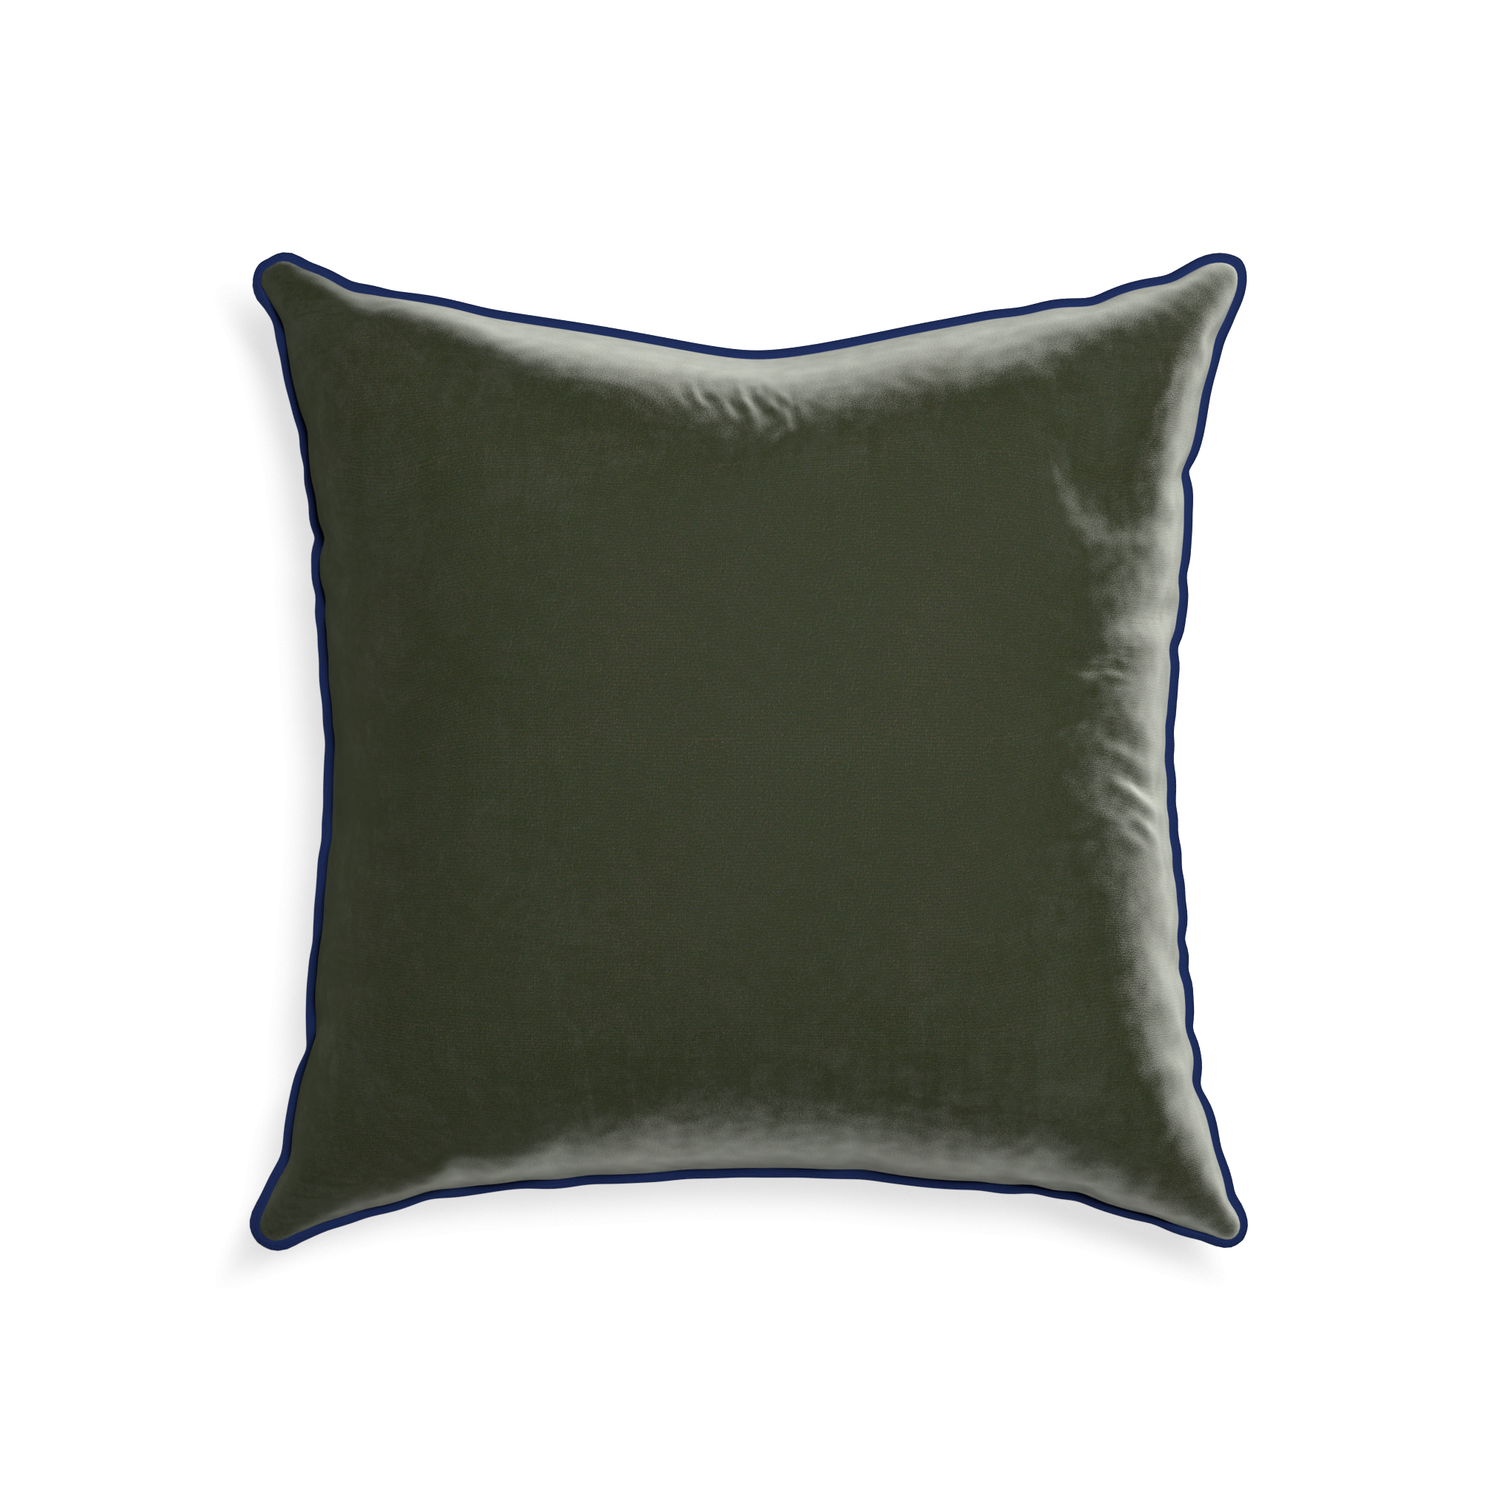 22-square fern velvet custom pillow with midnight piping on white background